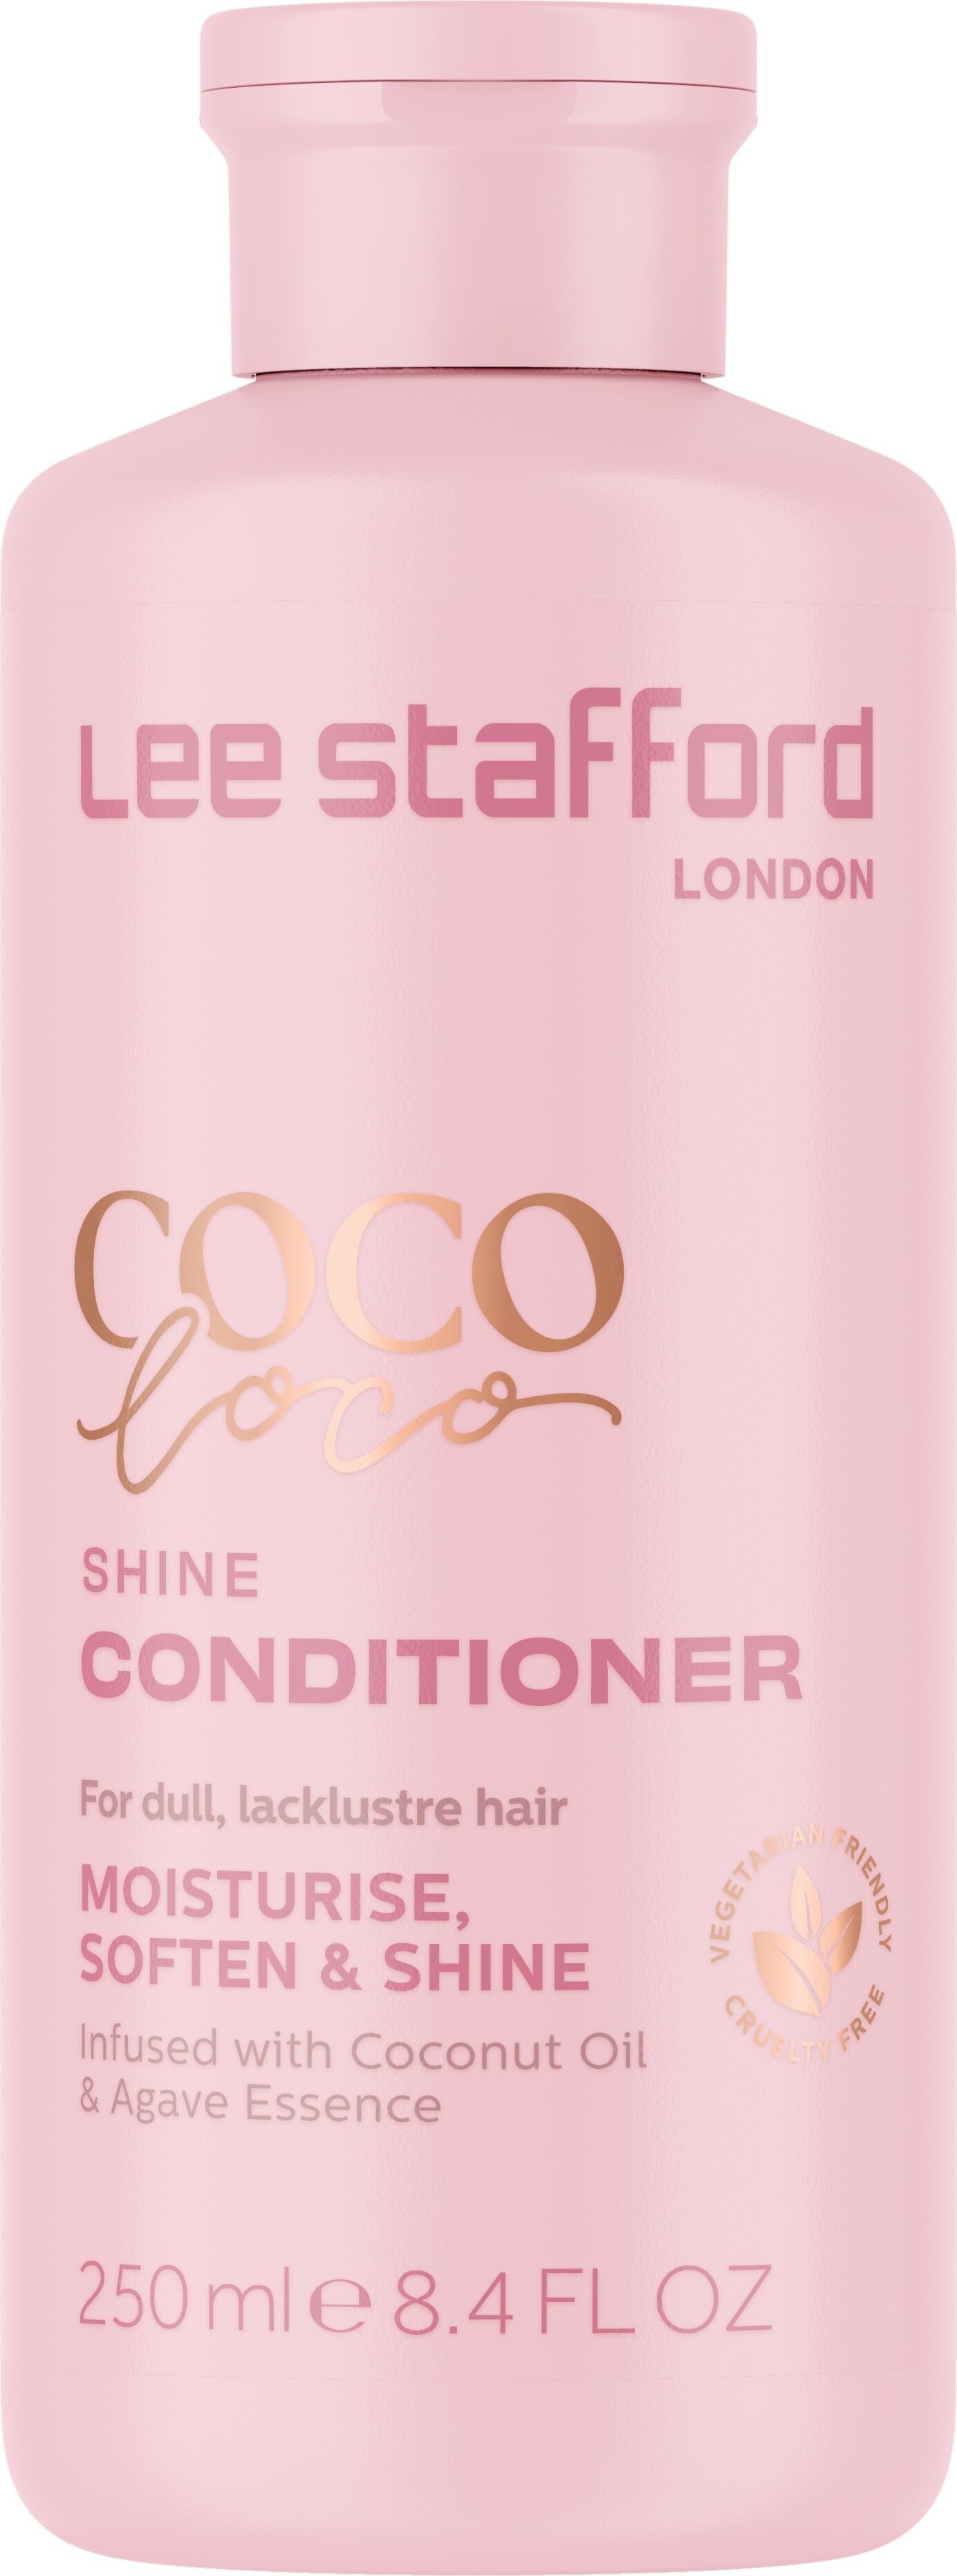 Se Lee Stafford - Coco Loco Shine Conditioner - 250 Ml hos Gucca.dk